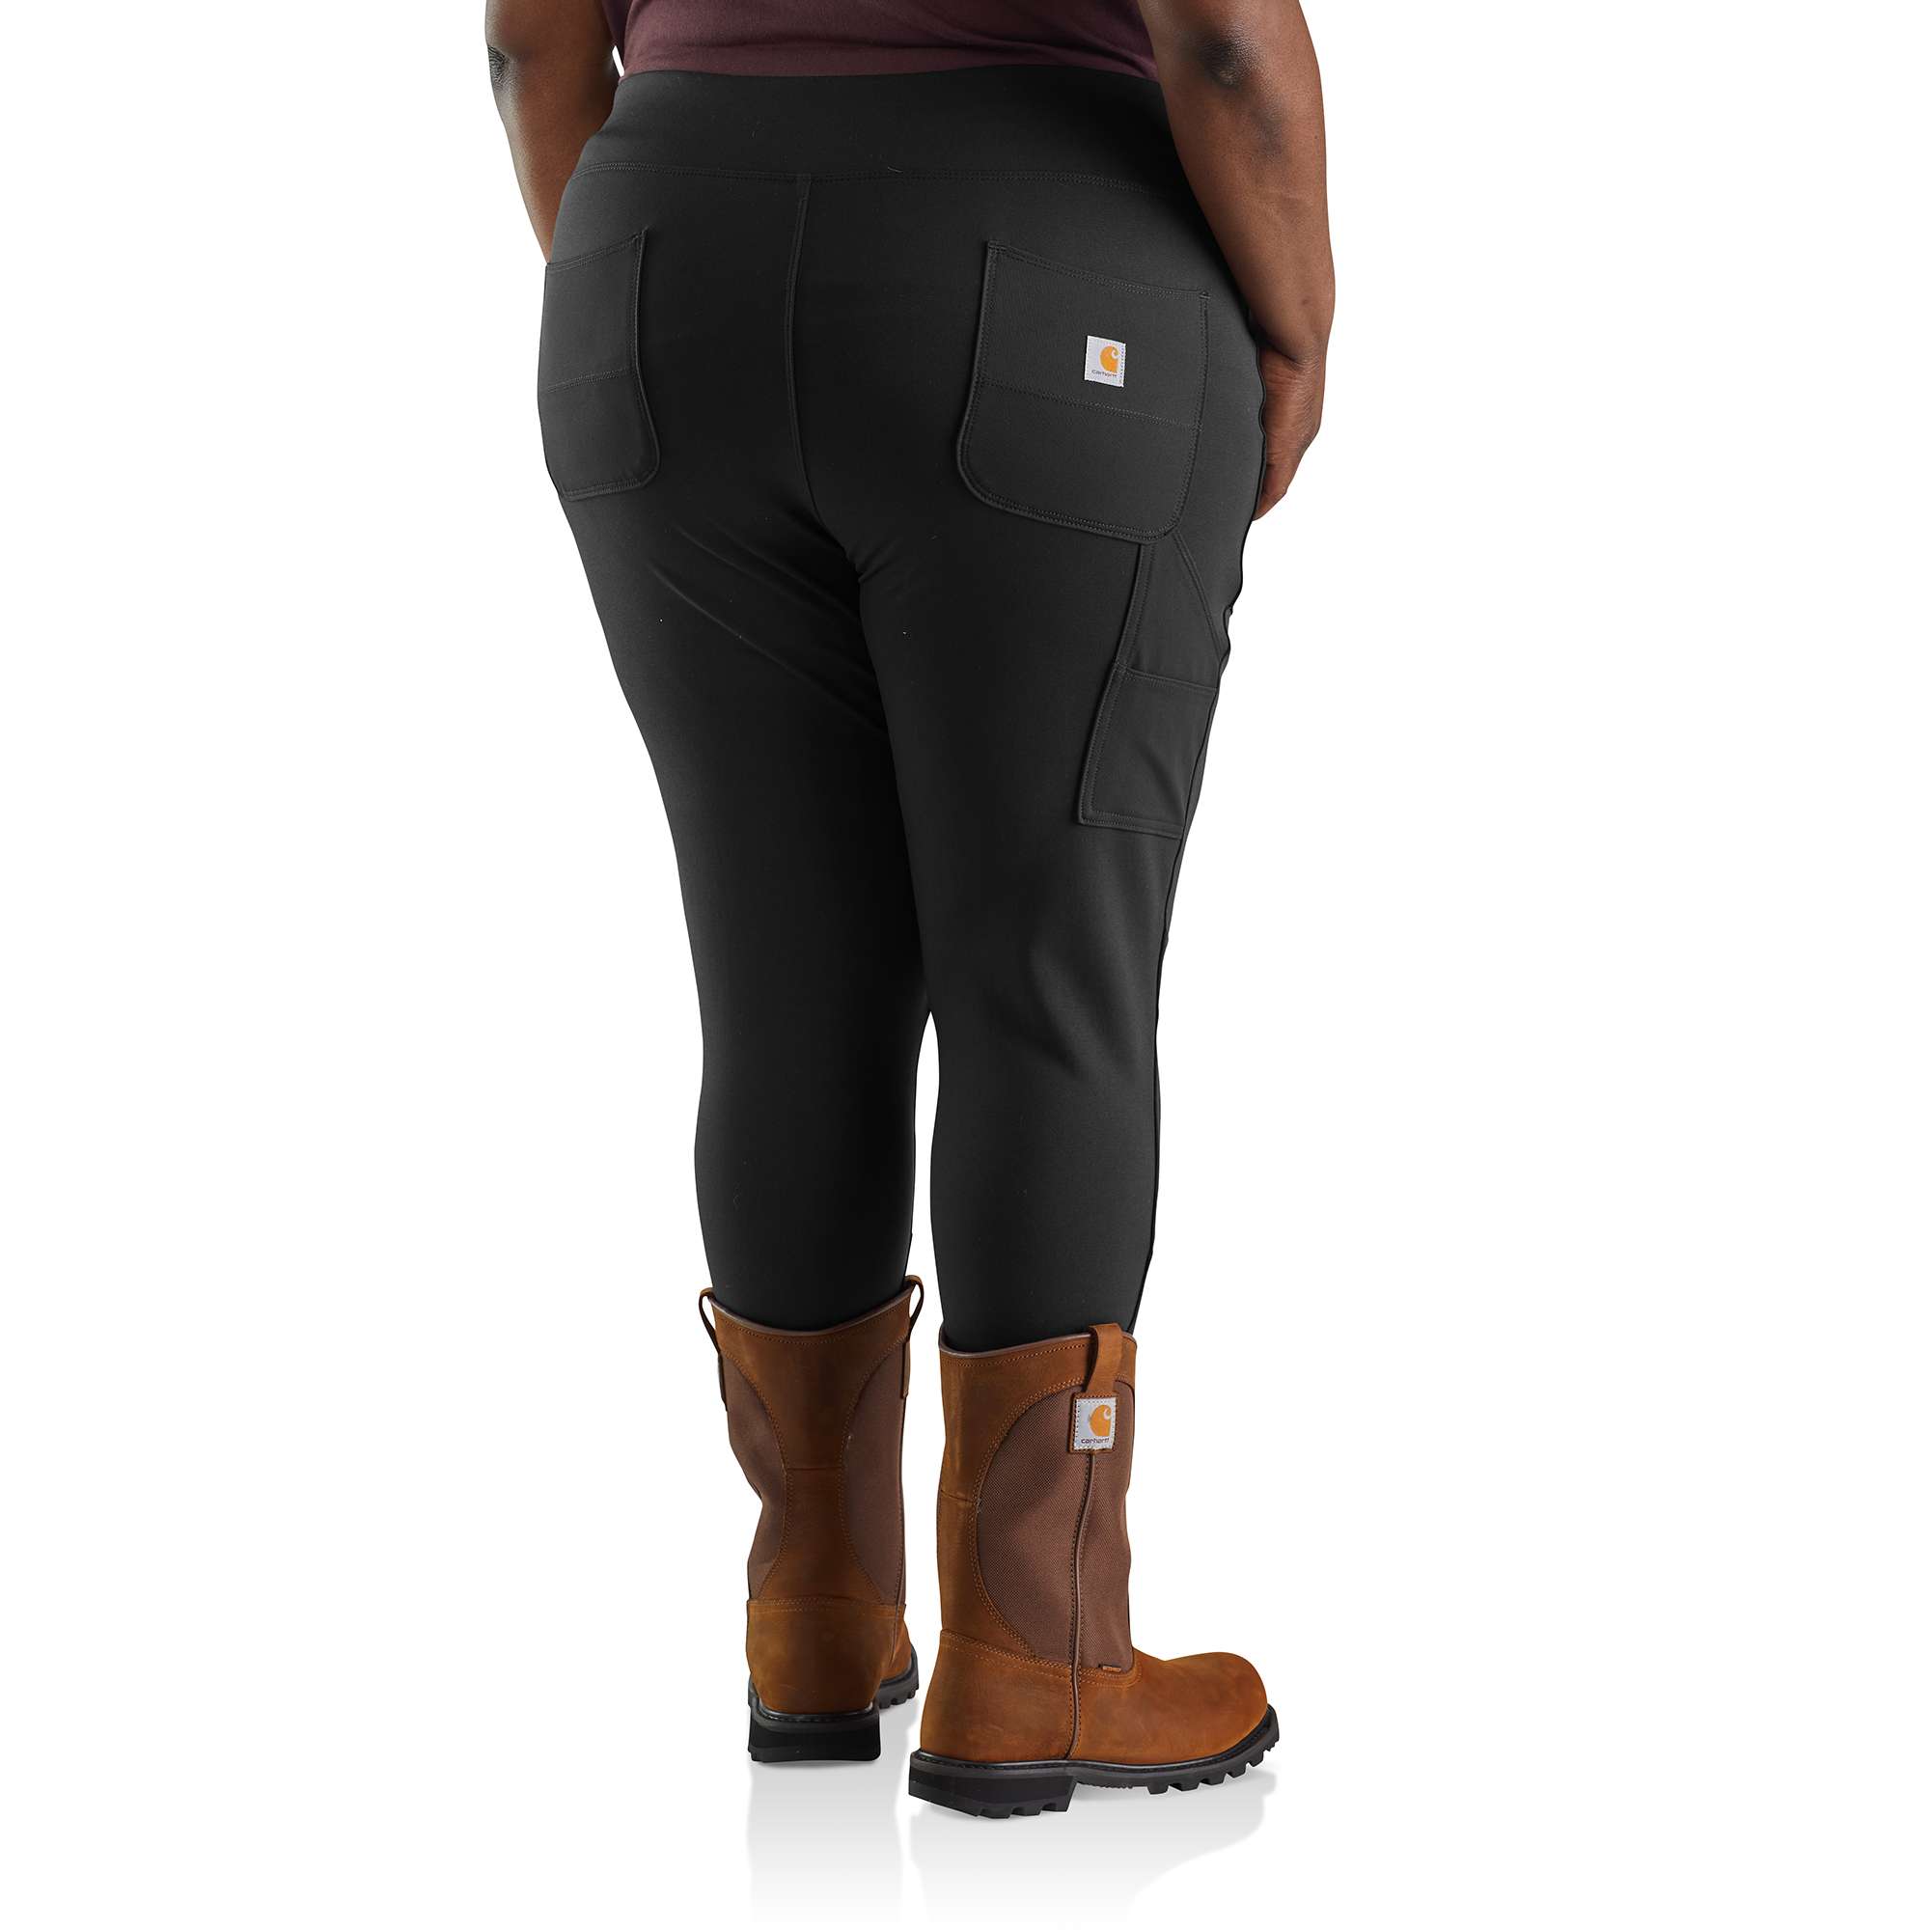 Carhartt Women's Skinny Fit Black Knit (Small) in the Pants